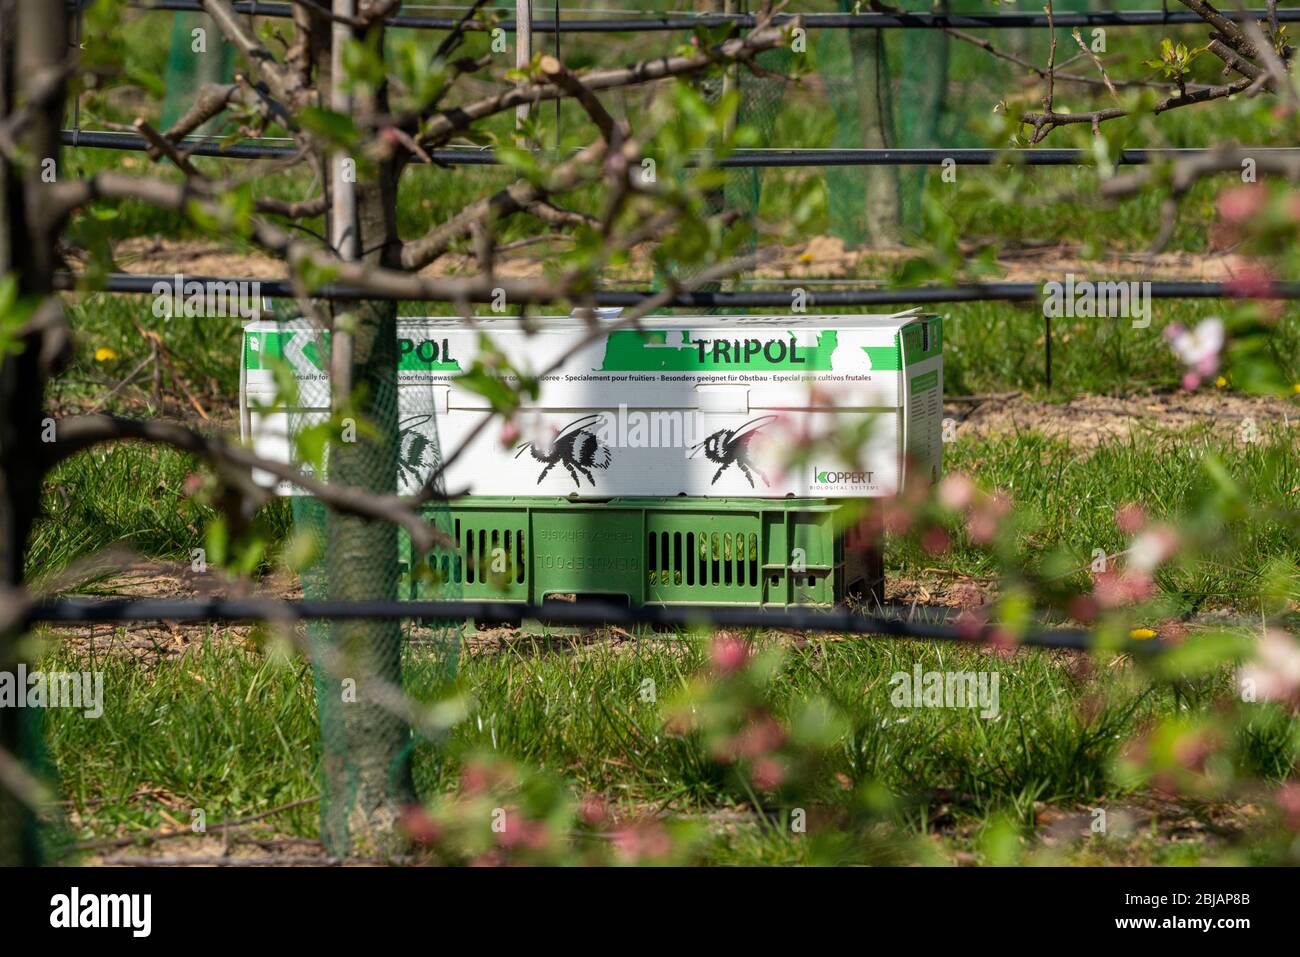 Bumblebee box, con tre colonie di bumblebee, per l'impollinazione di colture di campo, qui alberi di mele, Tripol, da Koppert Biological Systems, Foto Stock